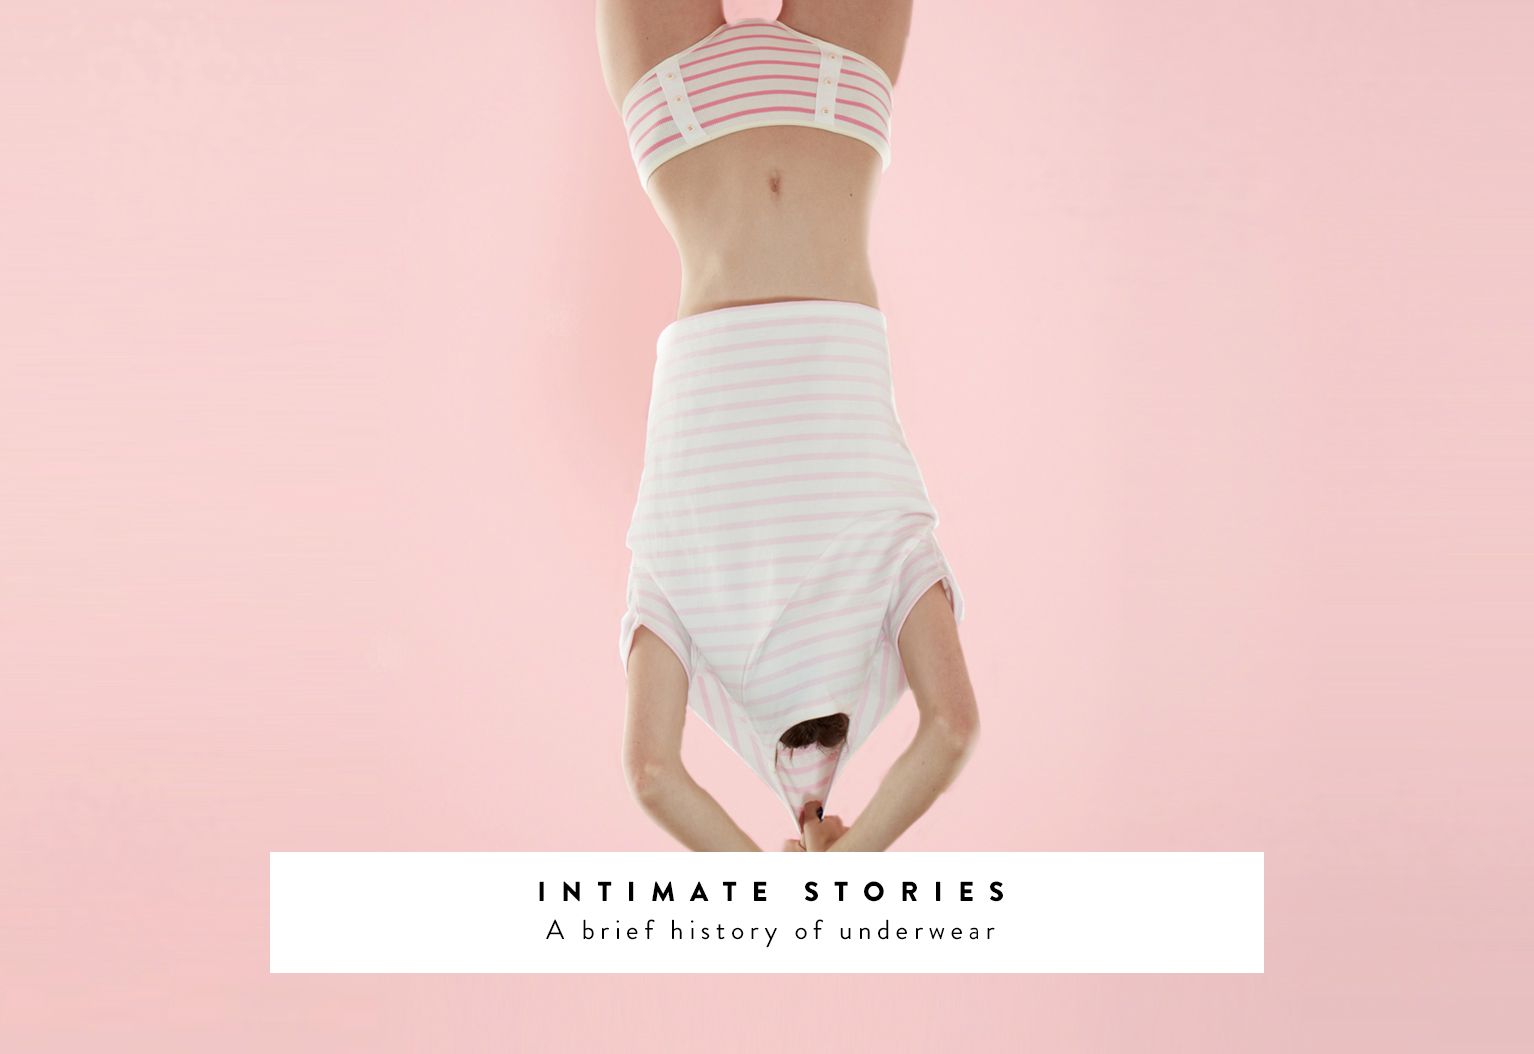 https://media.lexception.com/img/stories/54/Petit-Bateau-history-of-underwear.jpg